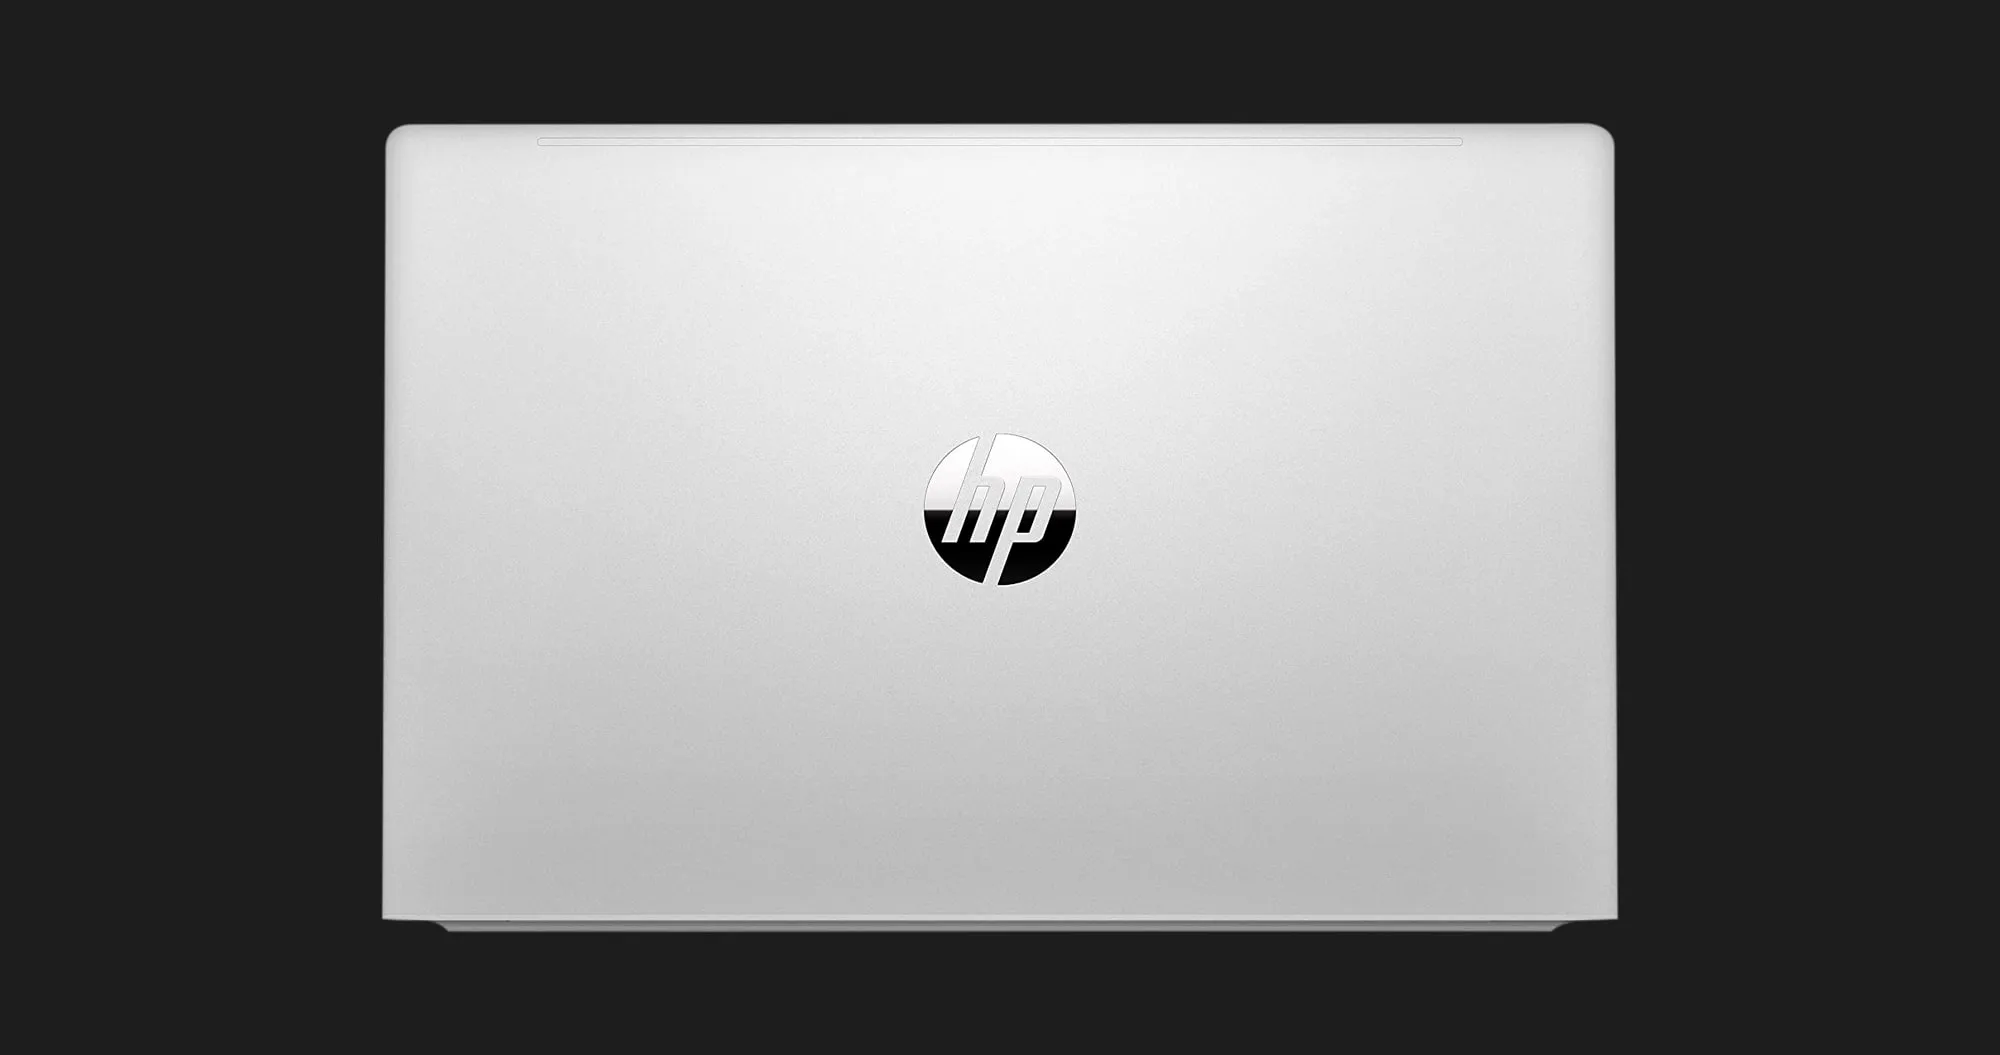 Ноутбук HP Probook 450-G9 (Core i5 / 8GB RAM / 512GB)